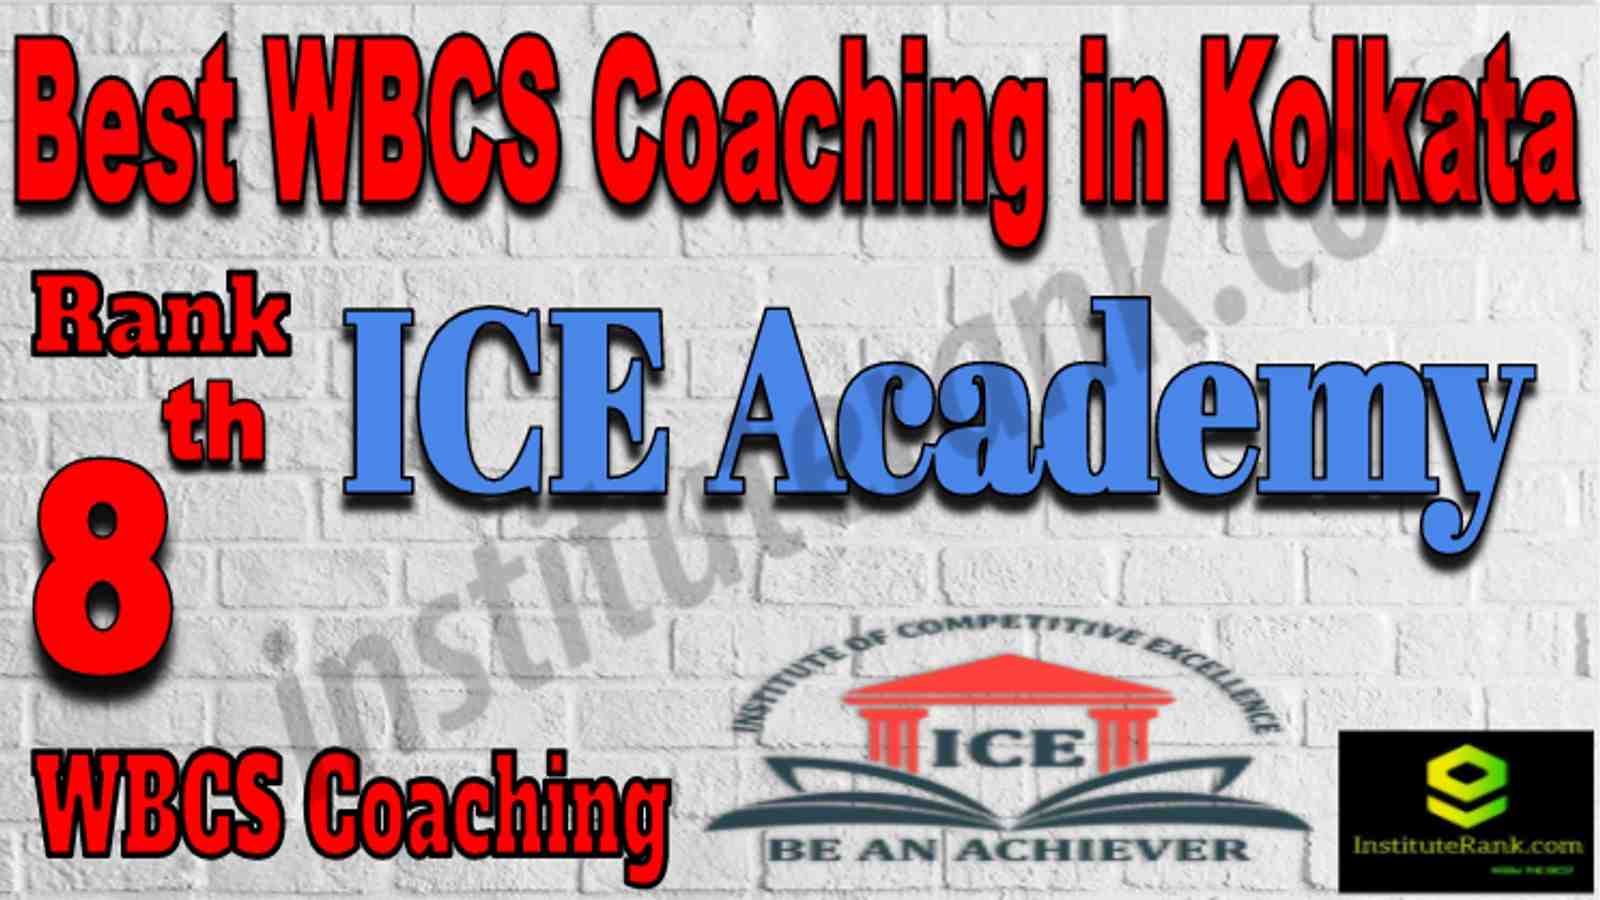 Rank 8 Best WBCS Coaching in Kolkata